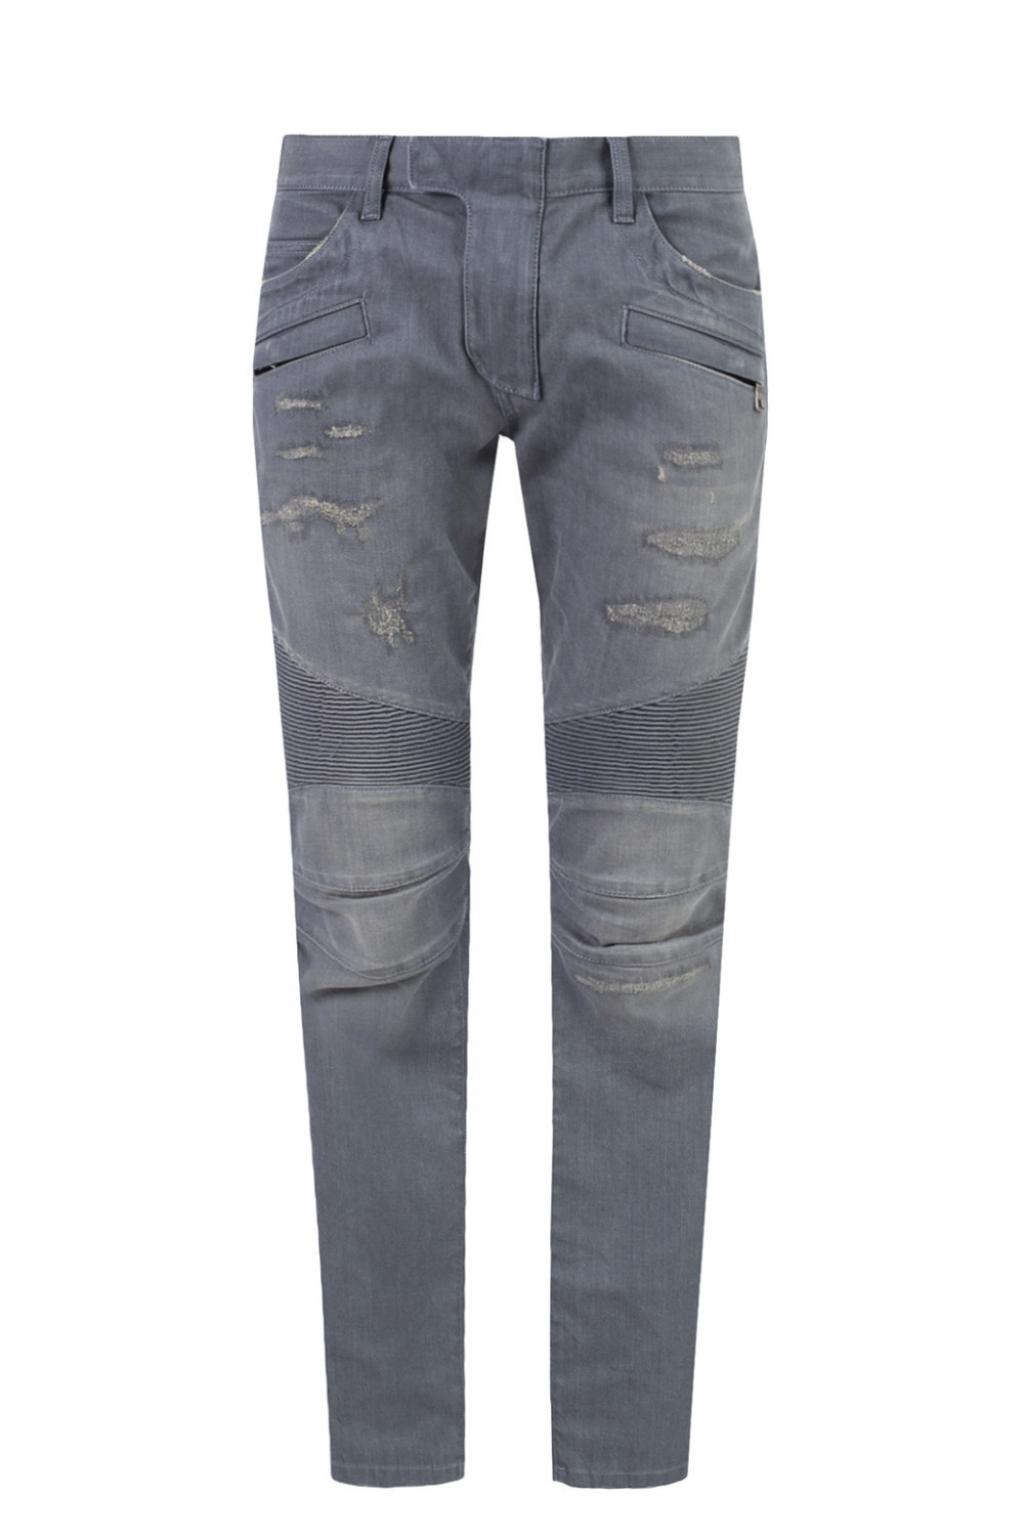 Balmain Biker jeans | Clothing | Vitkac